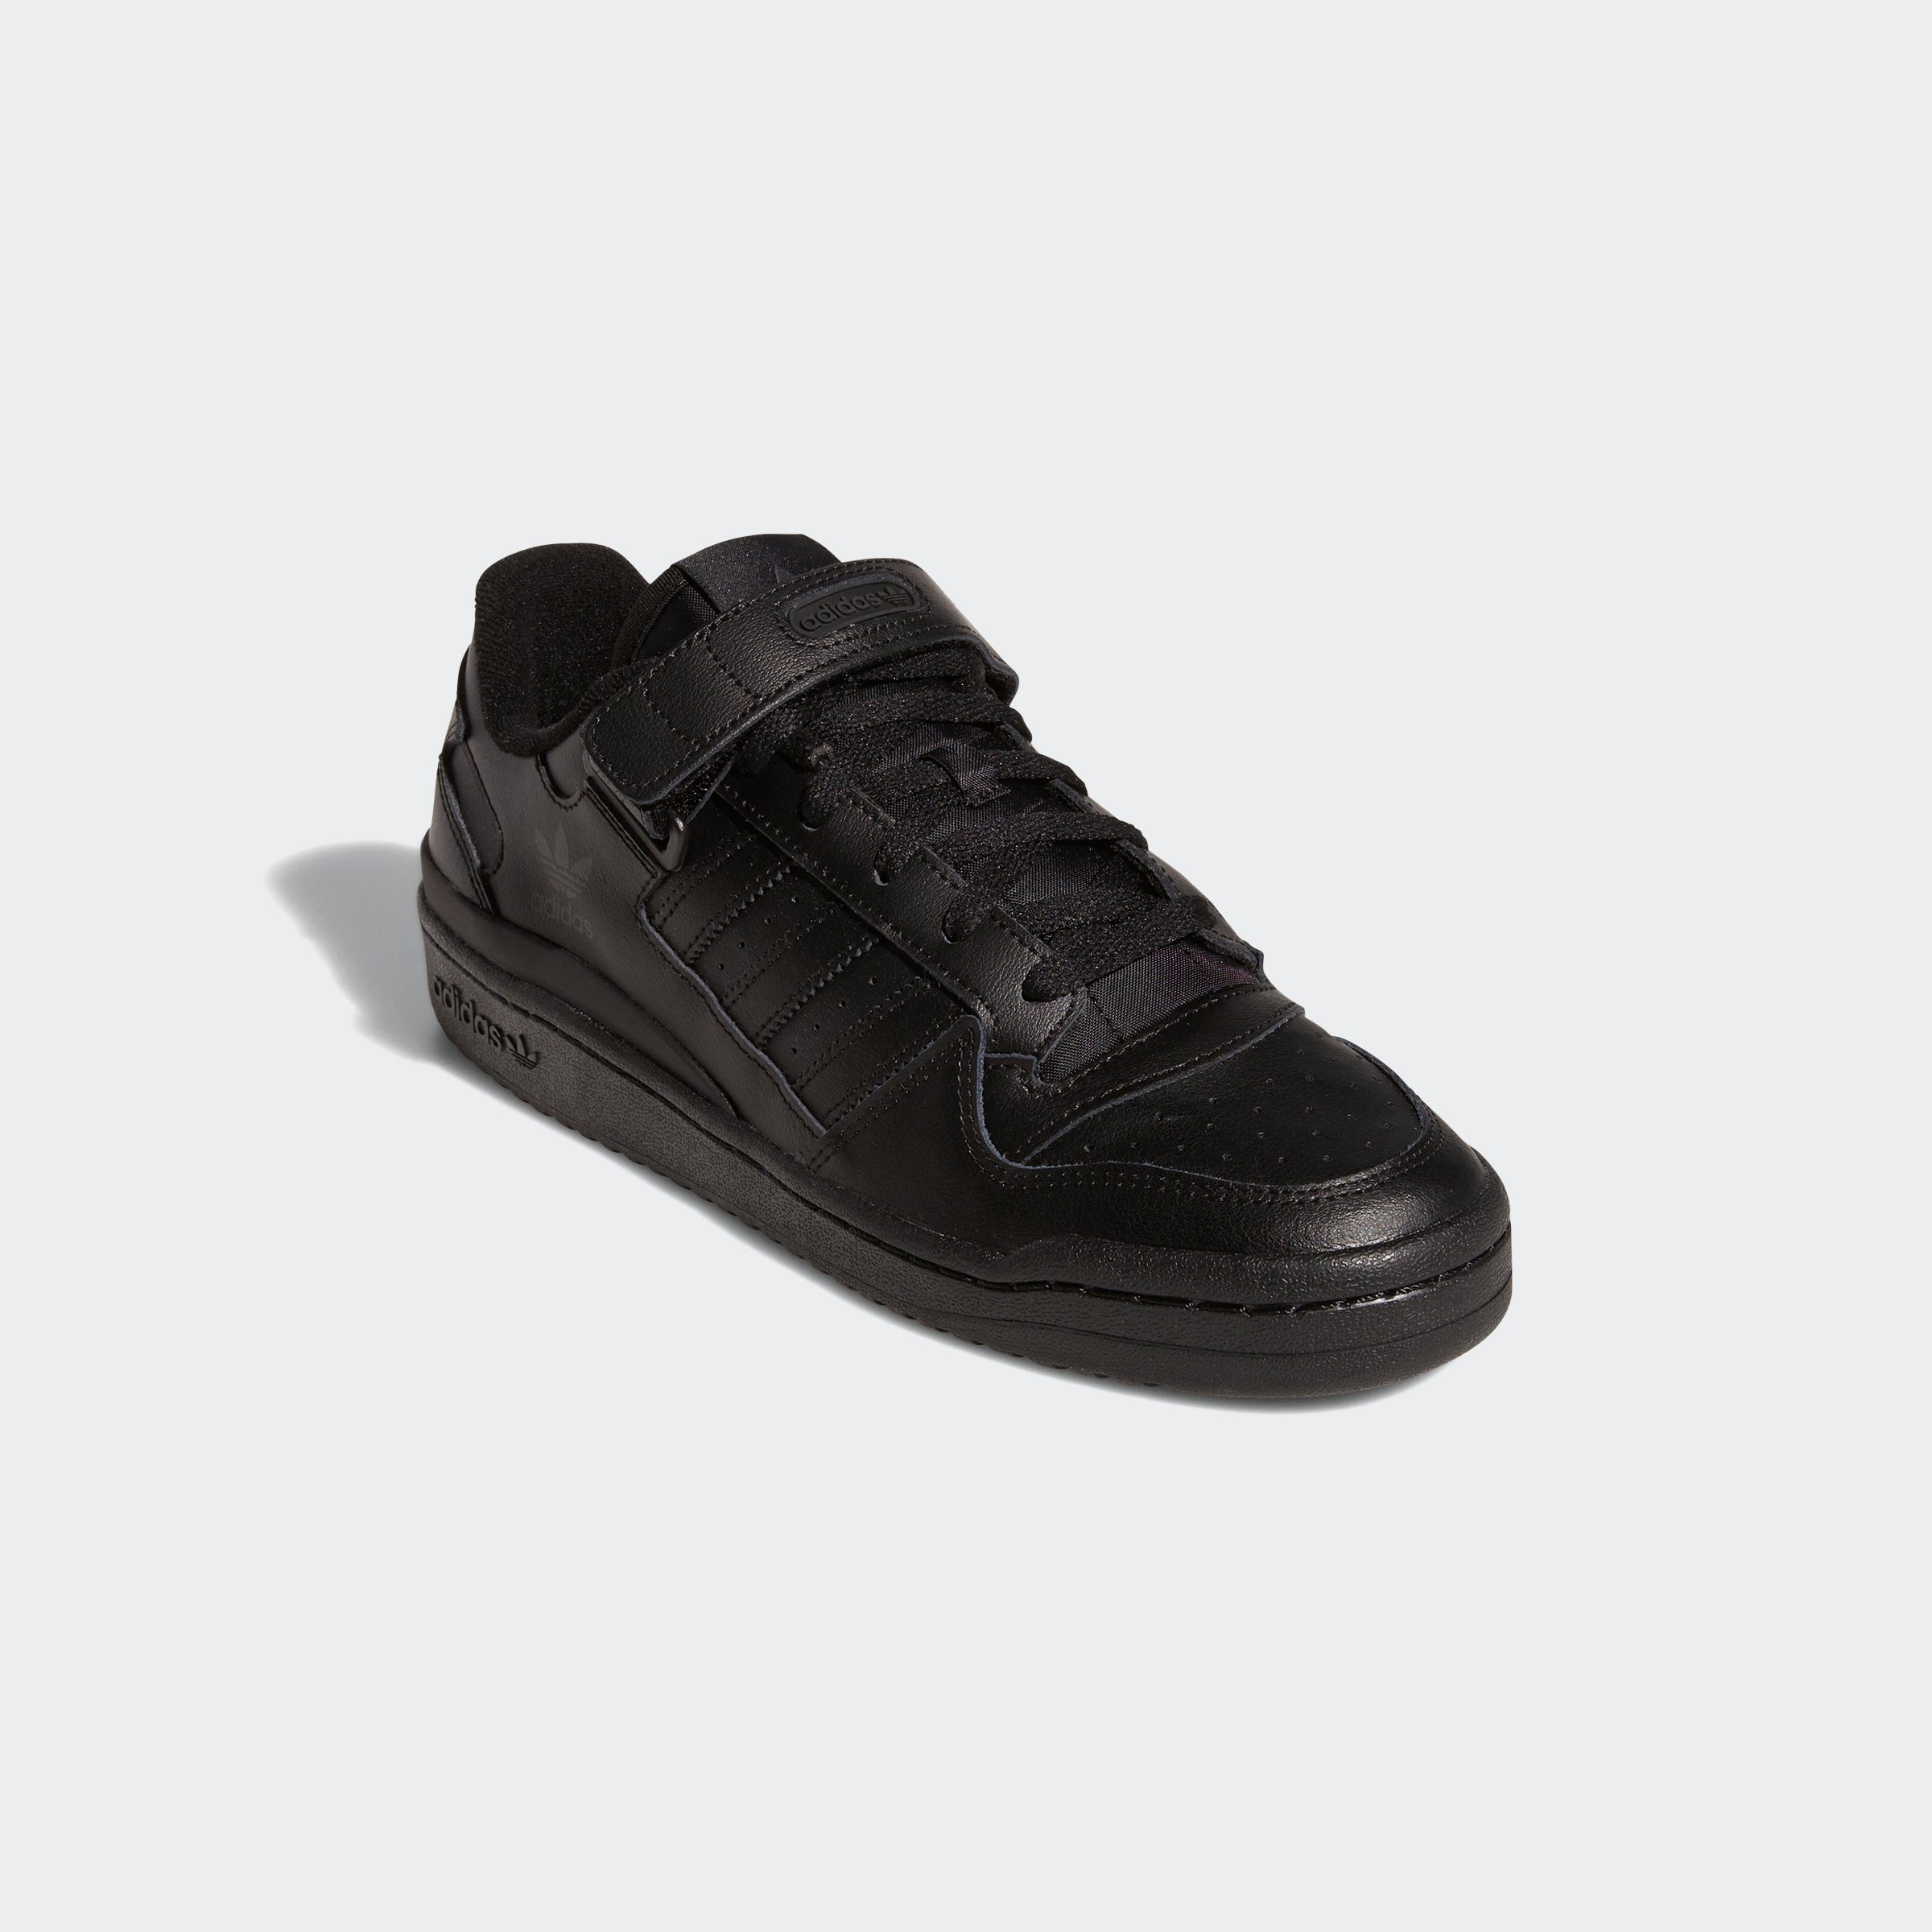 Sneaker FORUM LOW CBLACK/CBLACK/CBLACK adidas Originals